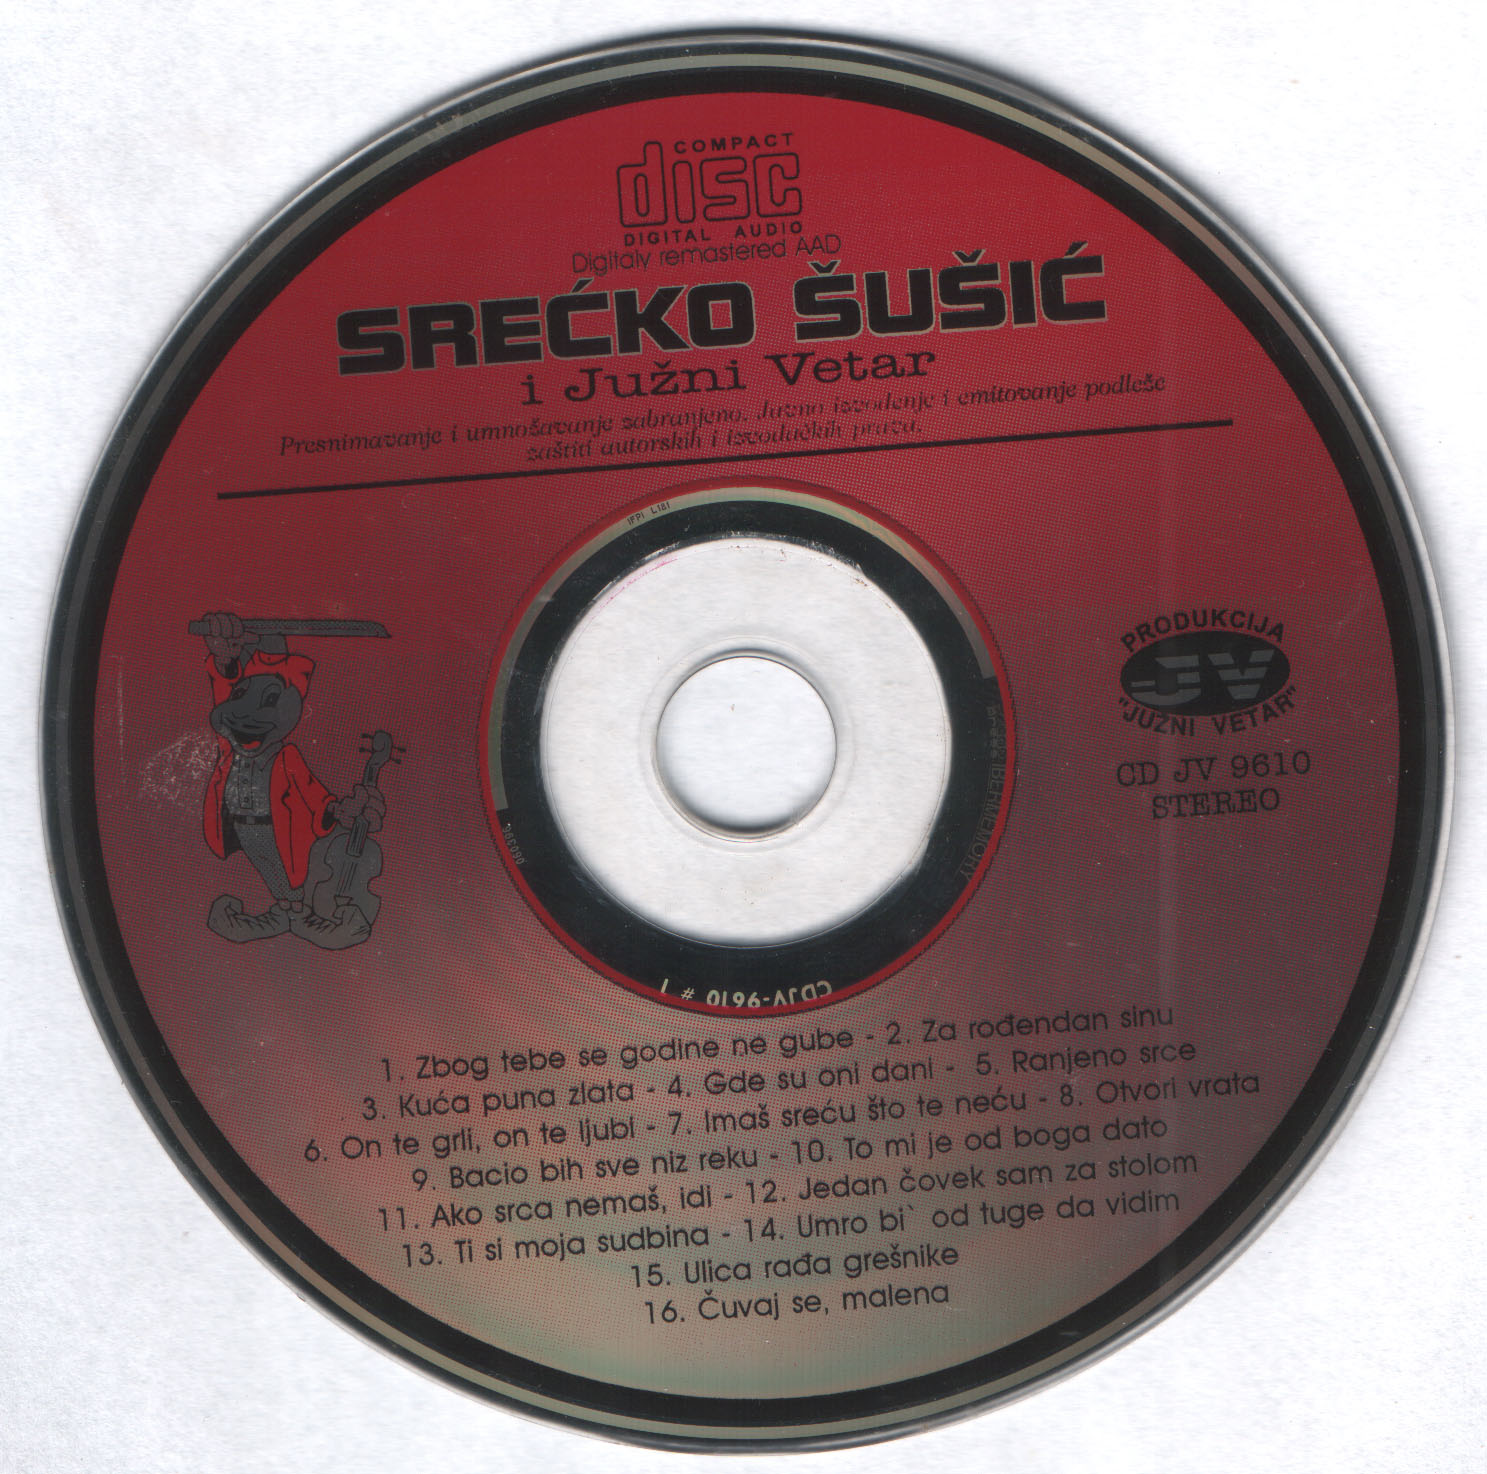 Srecko Susic 1996 Cd